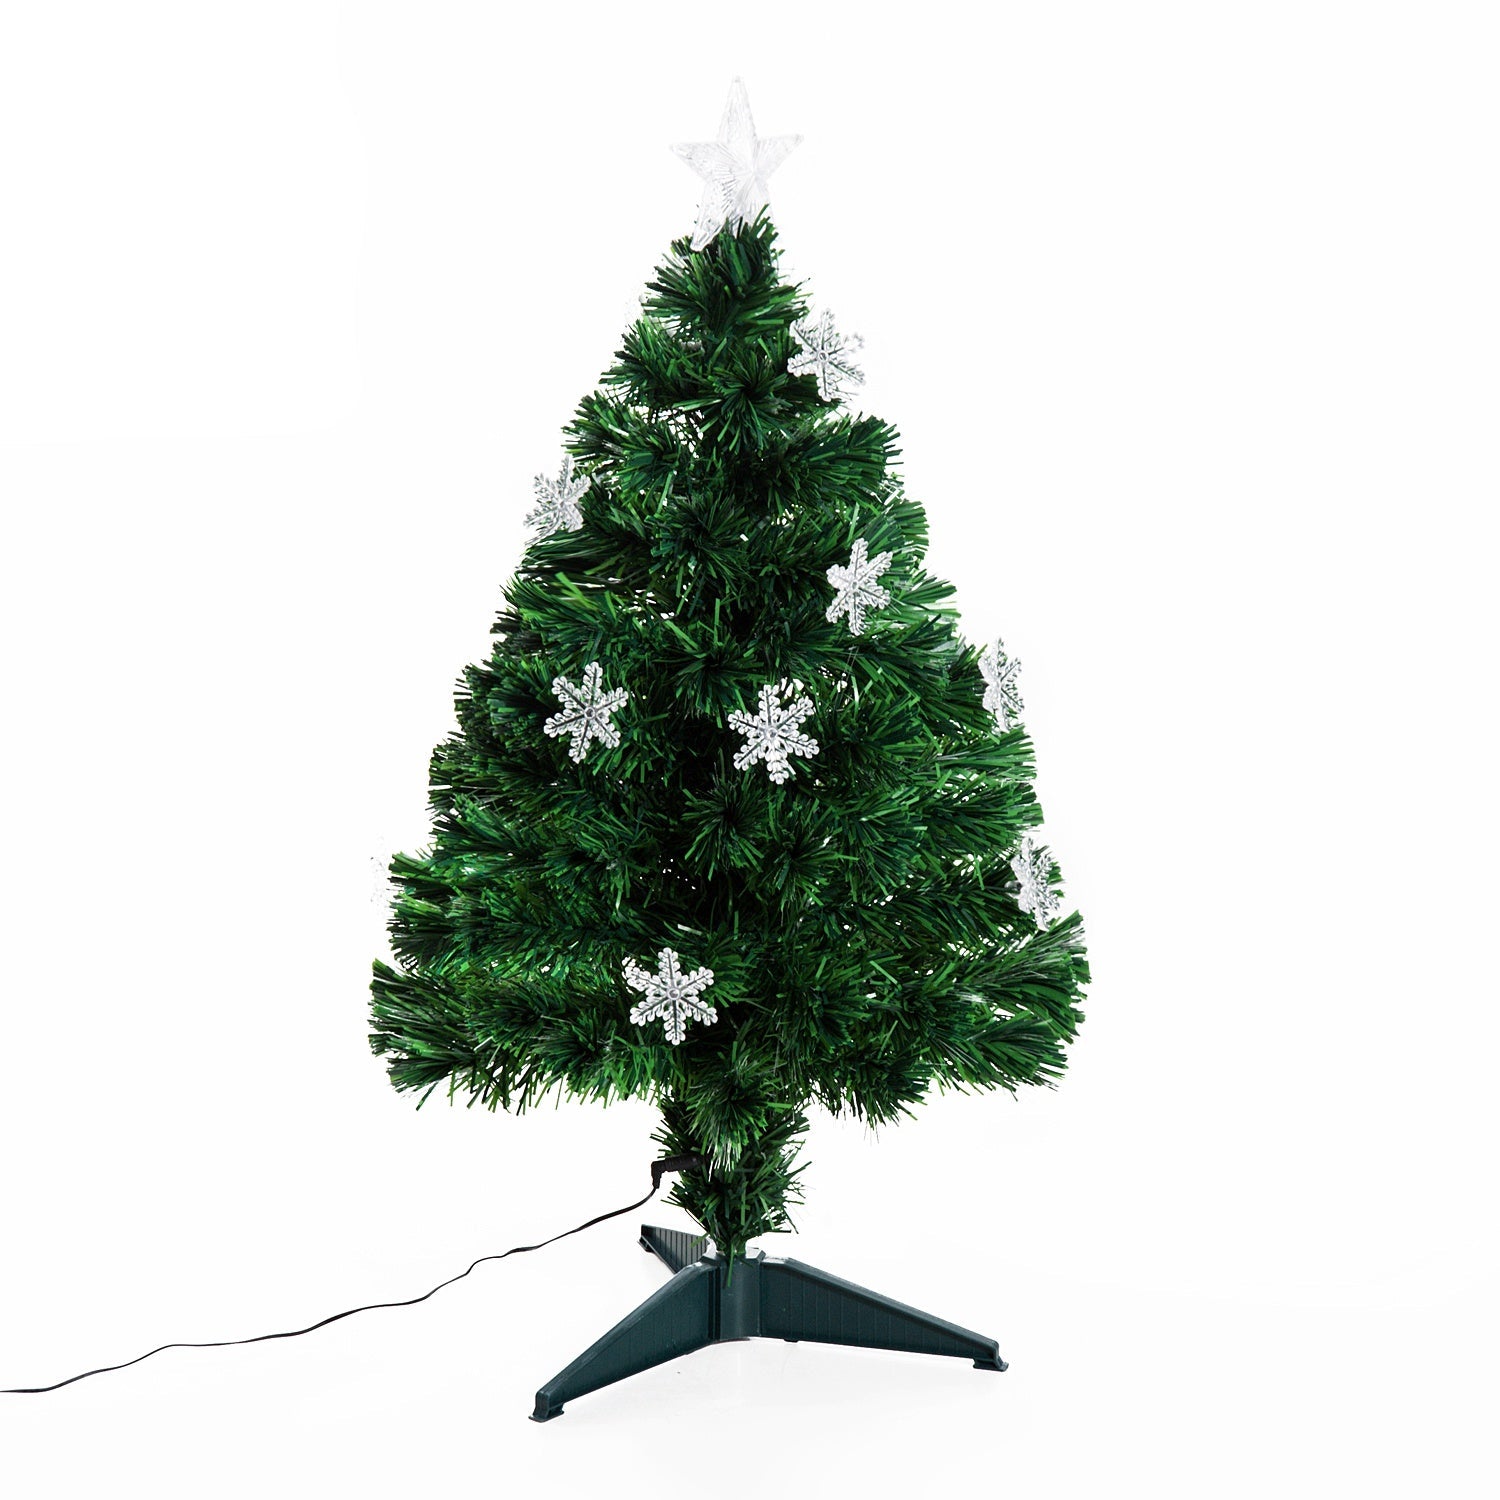 HOMCOM 3ft Fibre Optic Artificial Christmas Tree with Snowflakes Lights